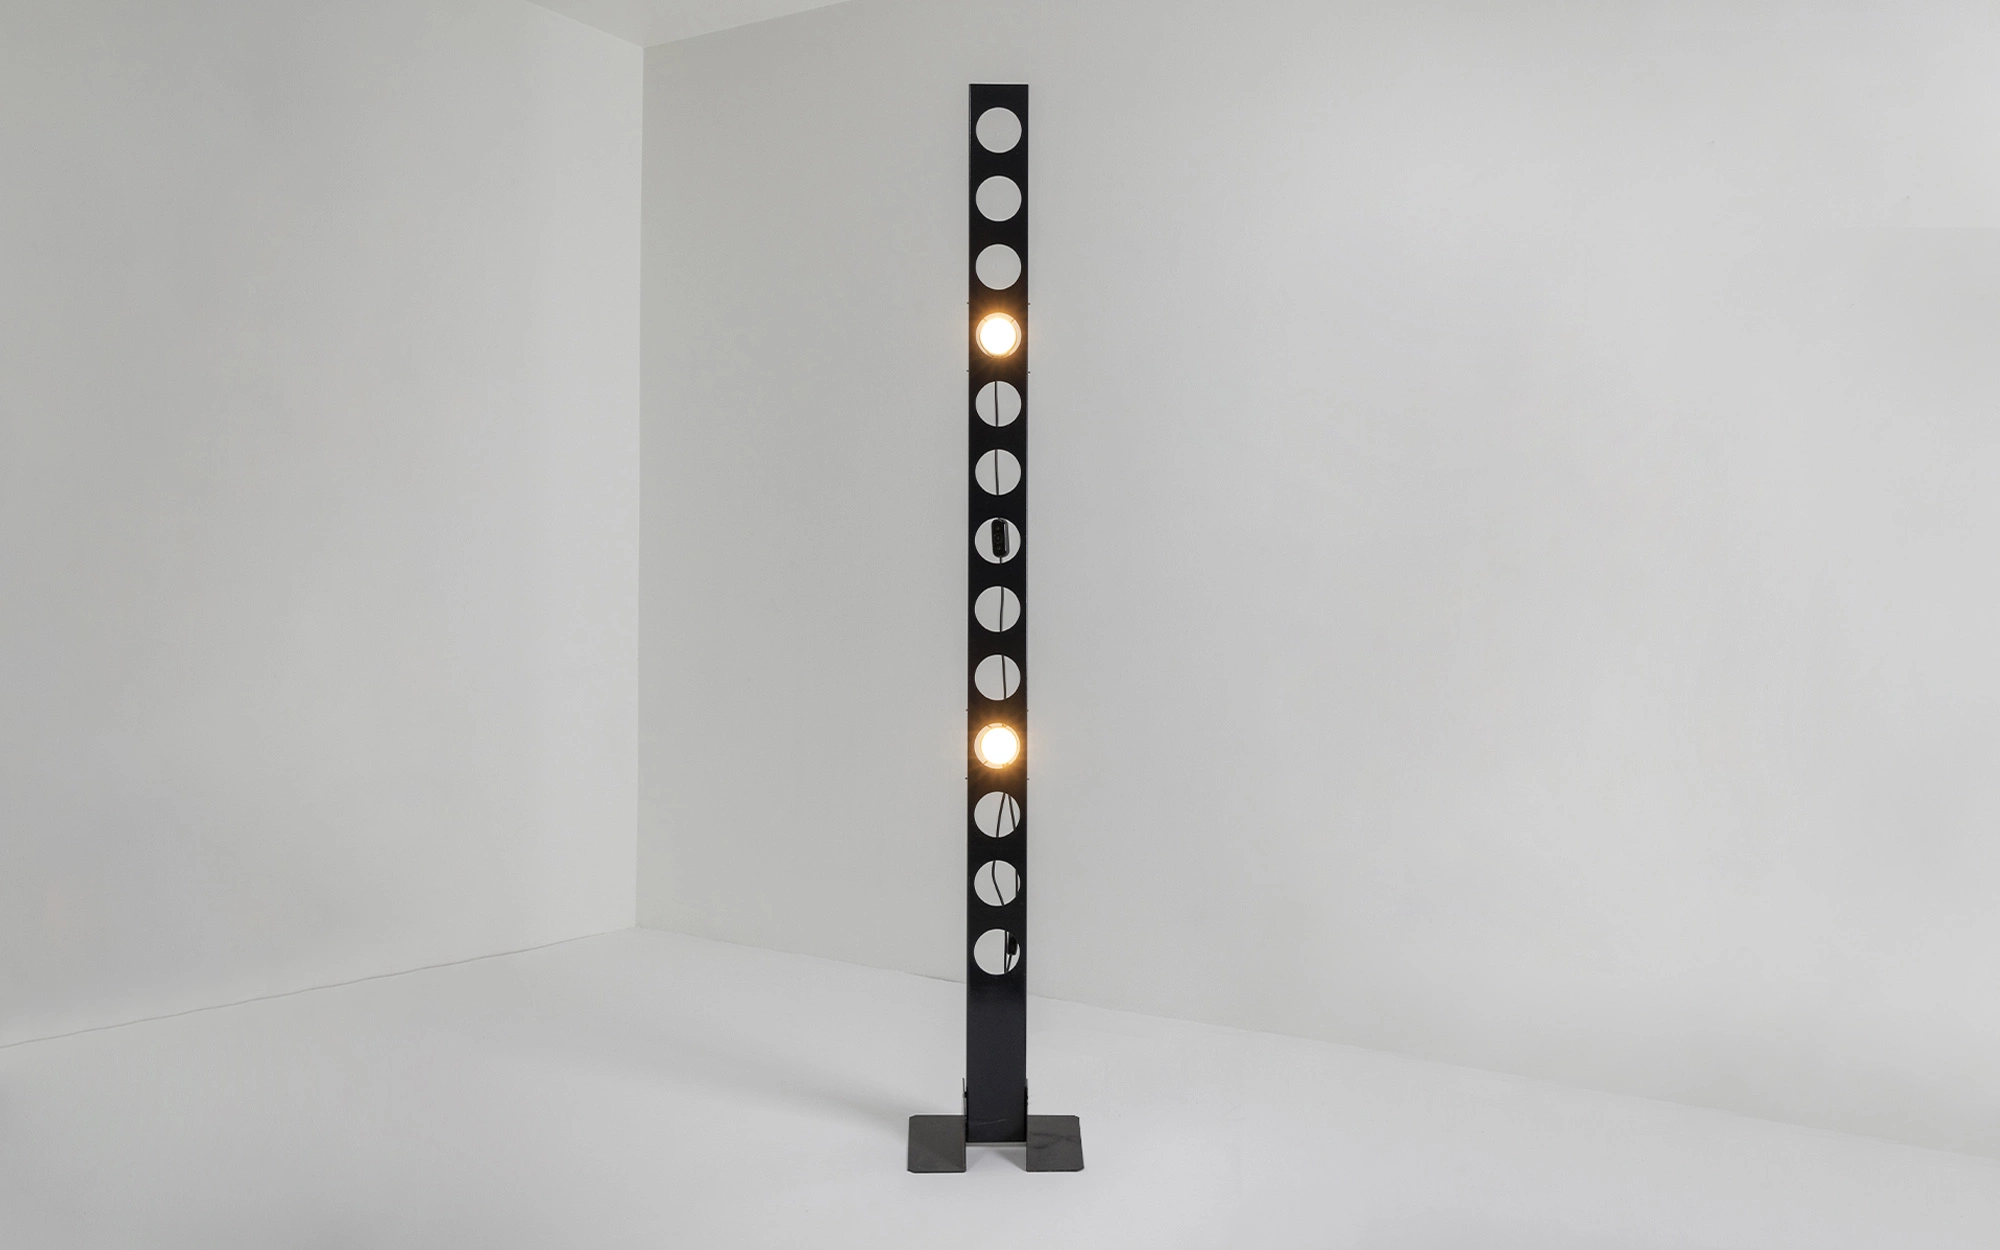 Ritto - Cesare and Franca Leonardi and Stagi  - Floor light - Galerie kreo